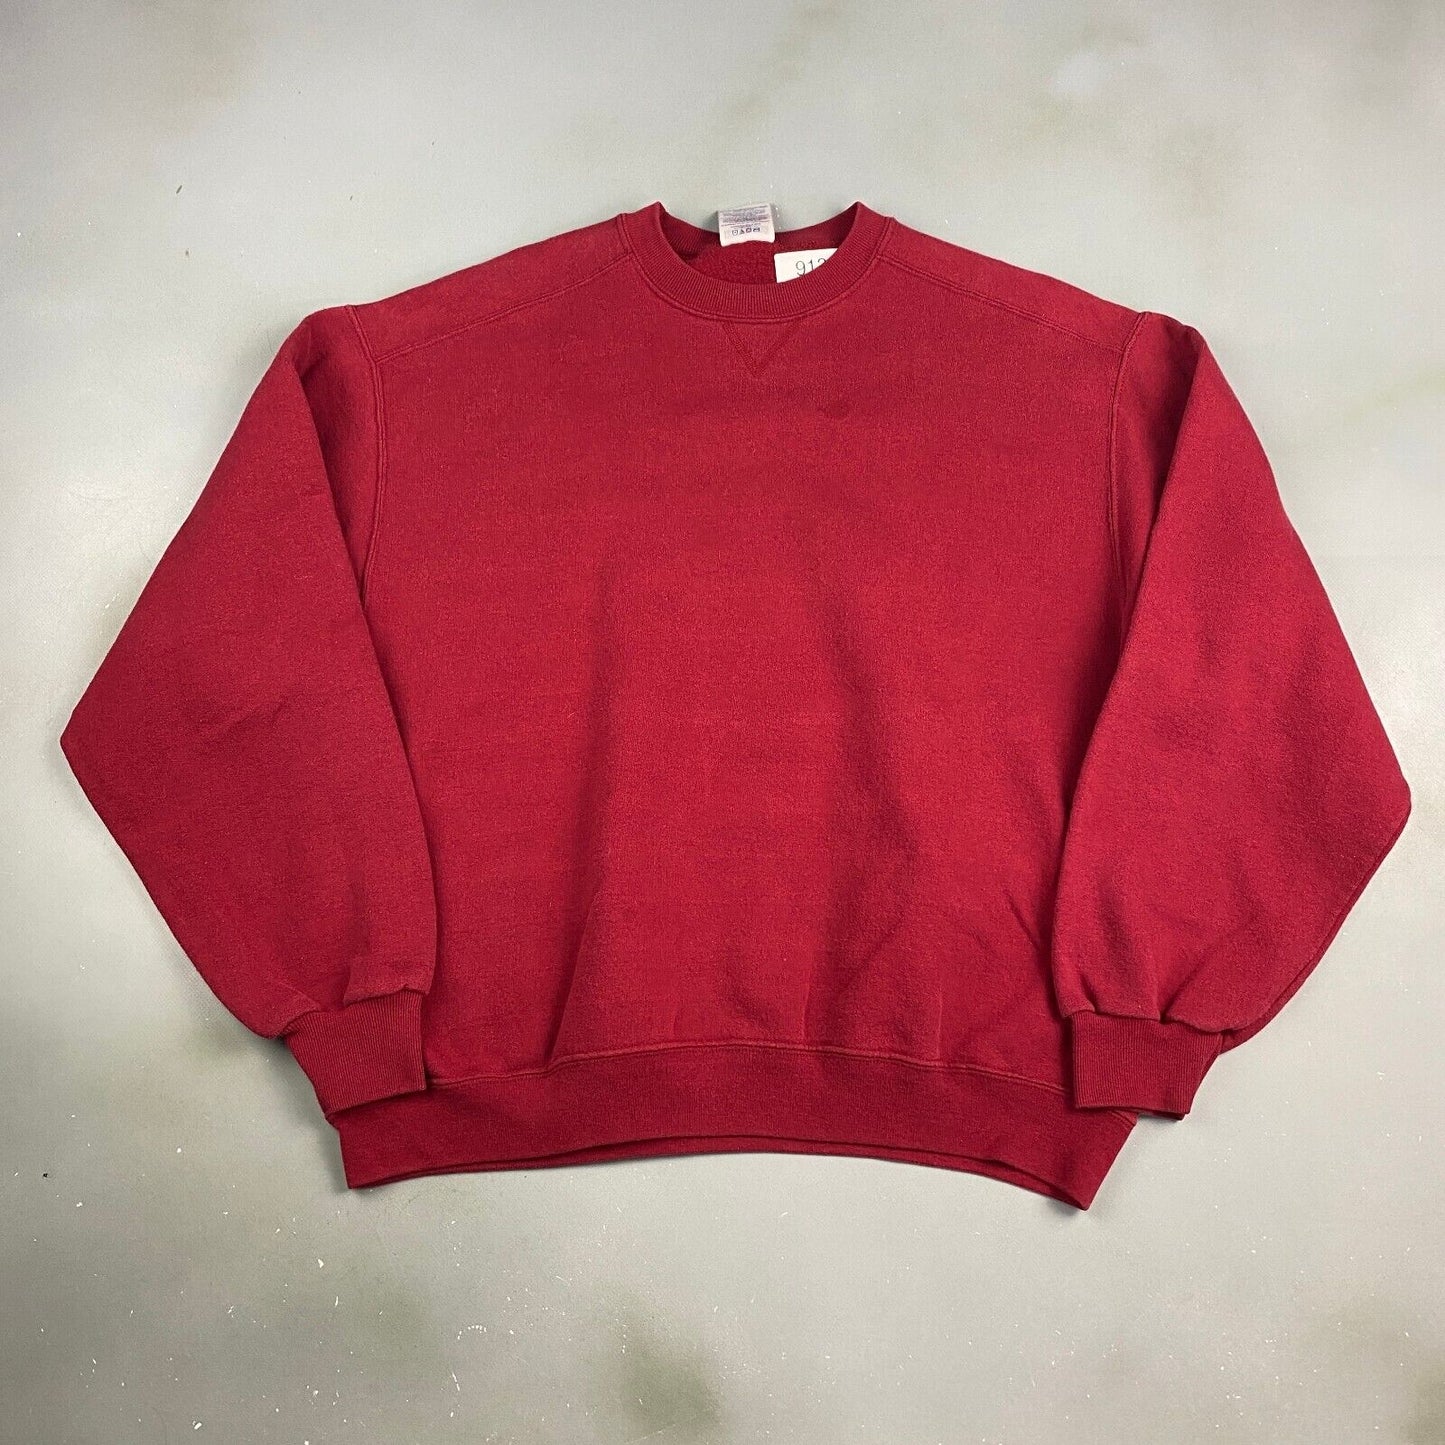 VINTAGE 90s Blank Red Jerzees Crewneck Sweater sz Large Men Adult